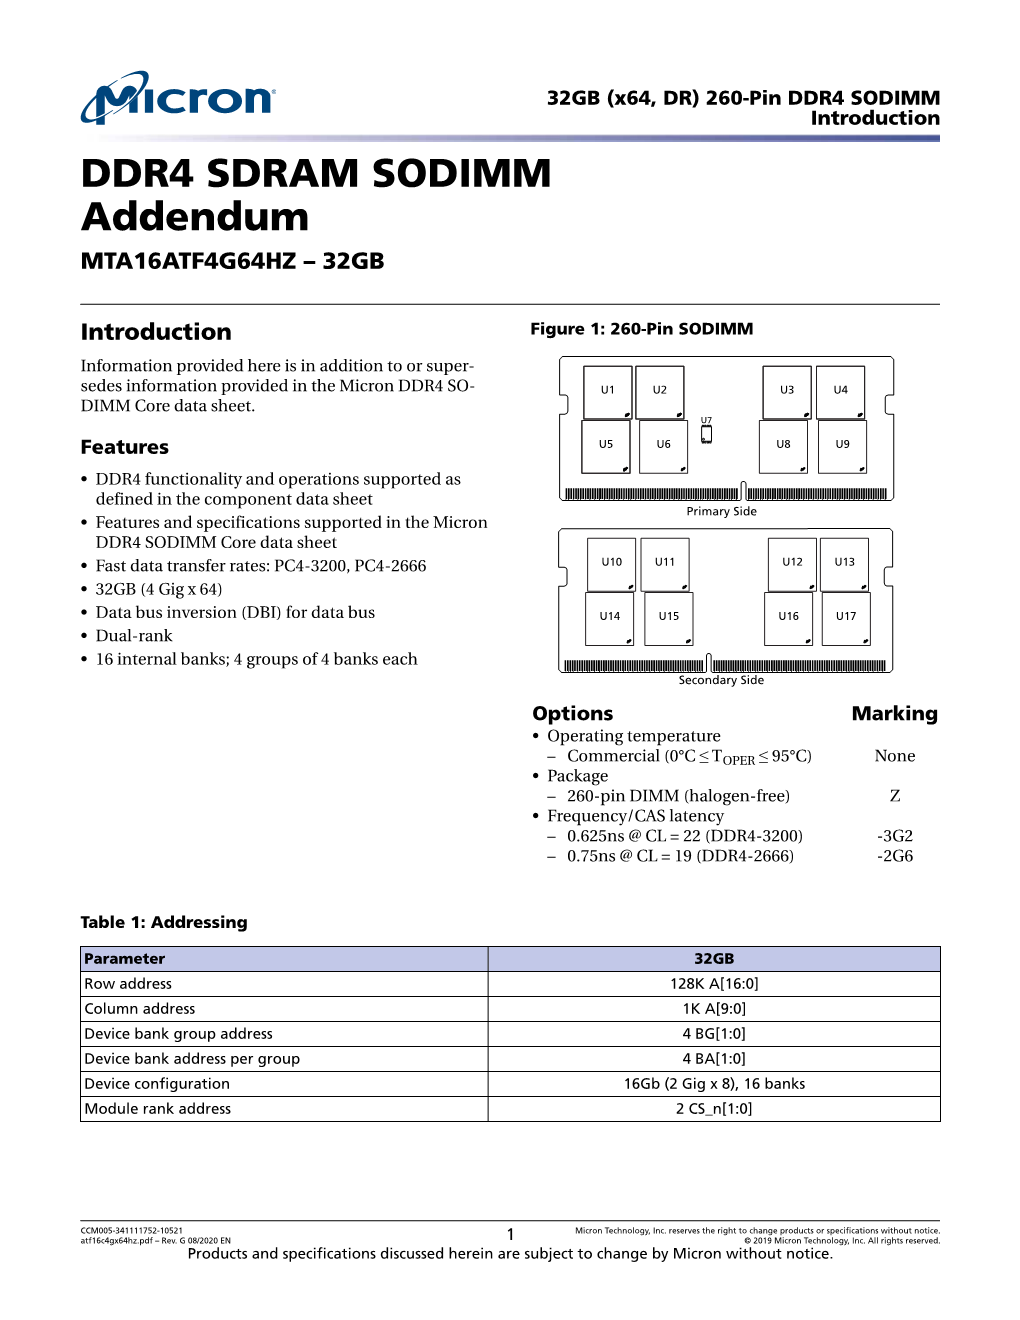 260-Pin DDR4 SODIMM Introduction DDR4 SDRAM SODIMM Addendum MTA16ATF4G64HZ – 32GB